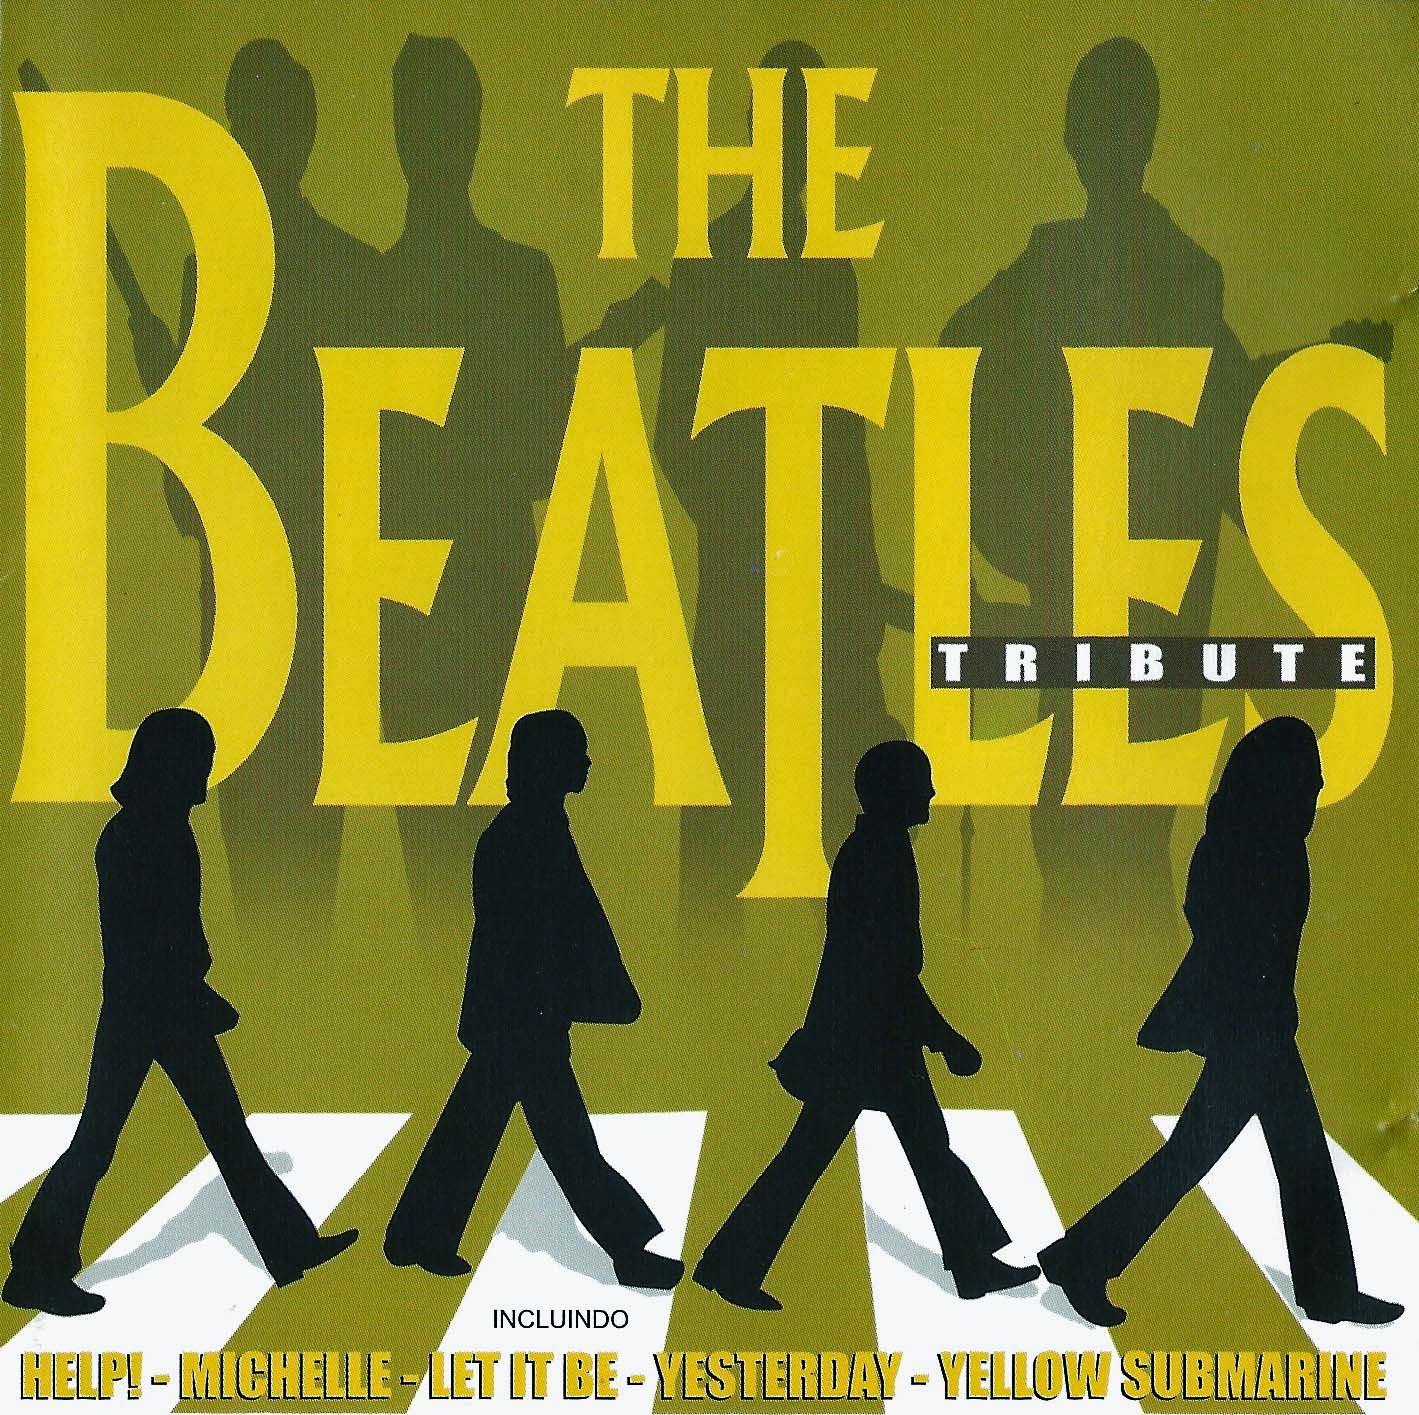 Cover beatles. Beatles обложка. The Beatles обложки альбомов. Битлз кавер группы. Альбомы группы Битлз.